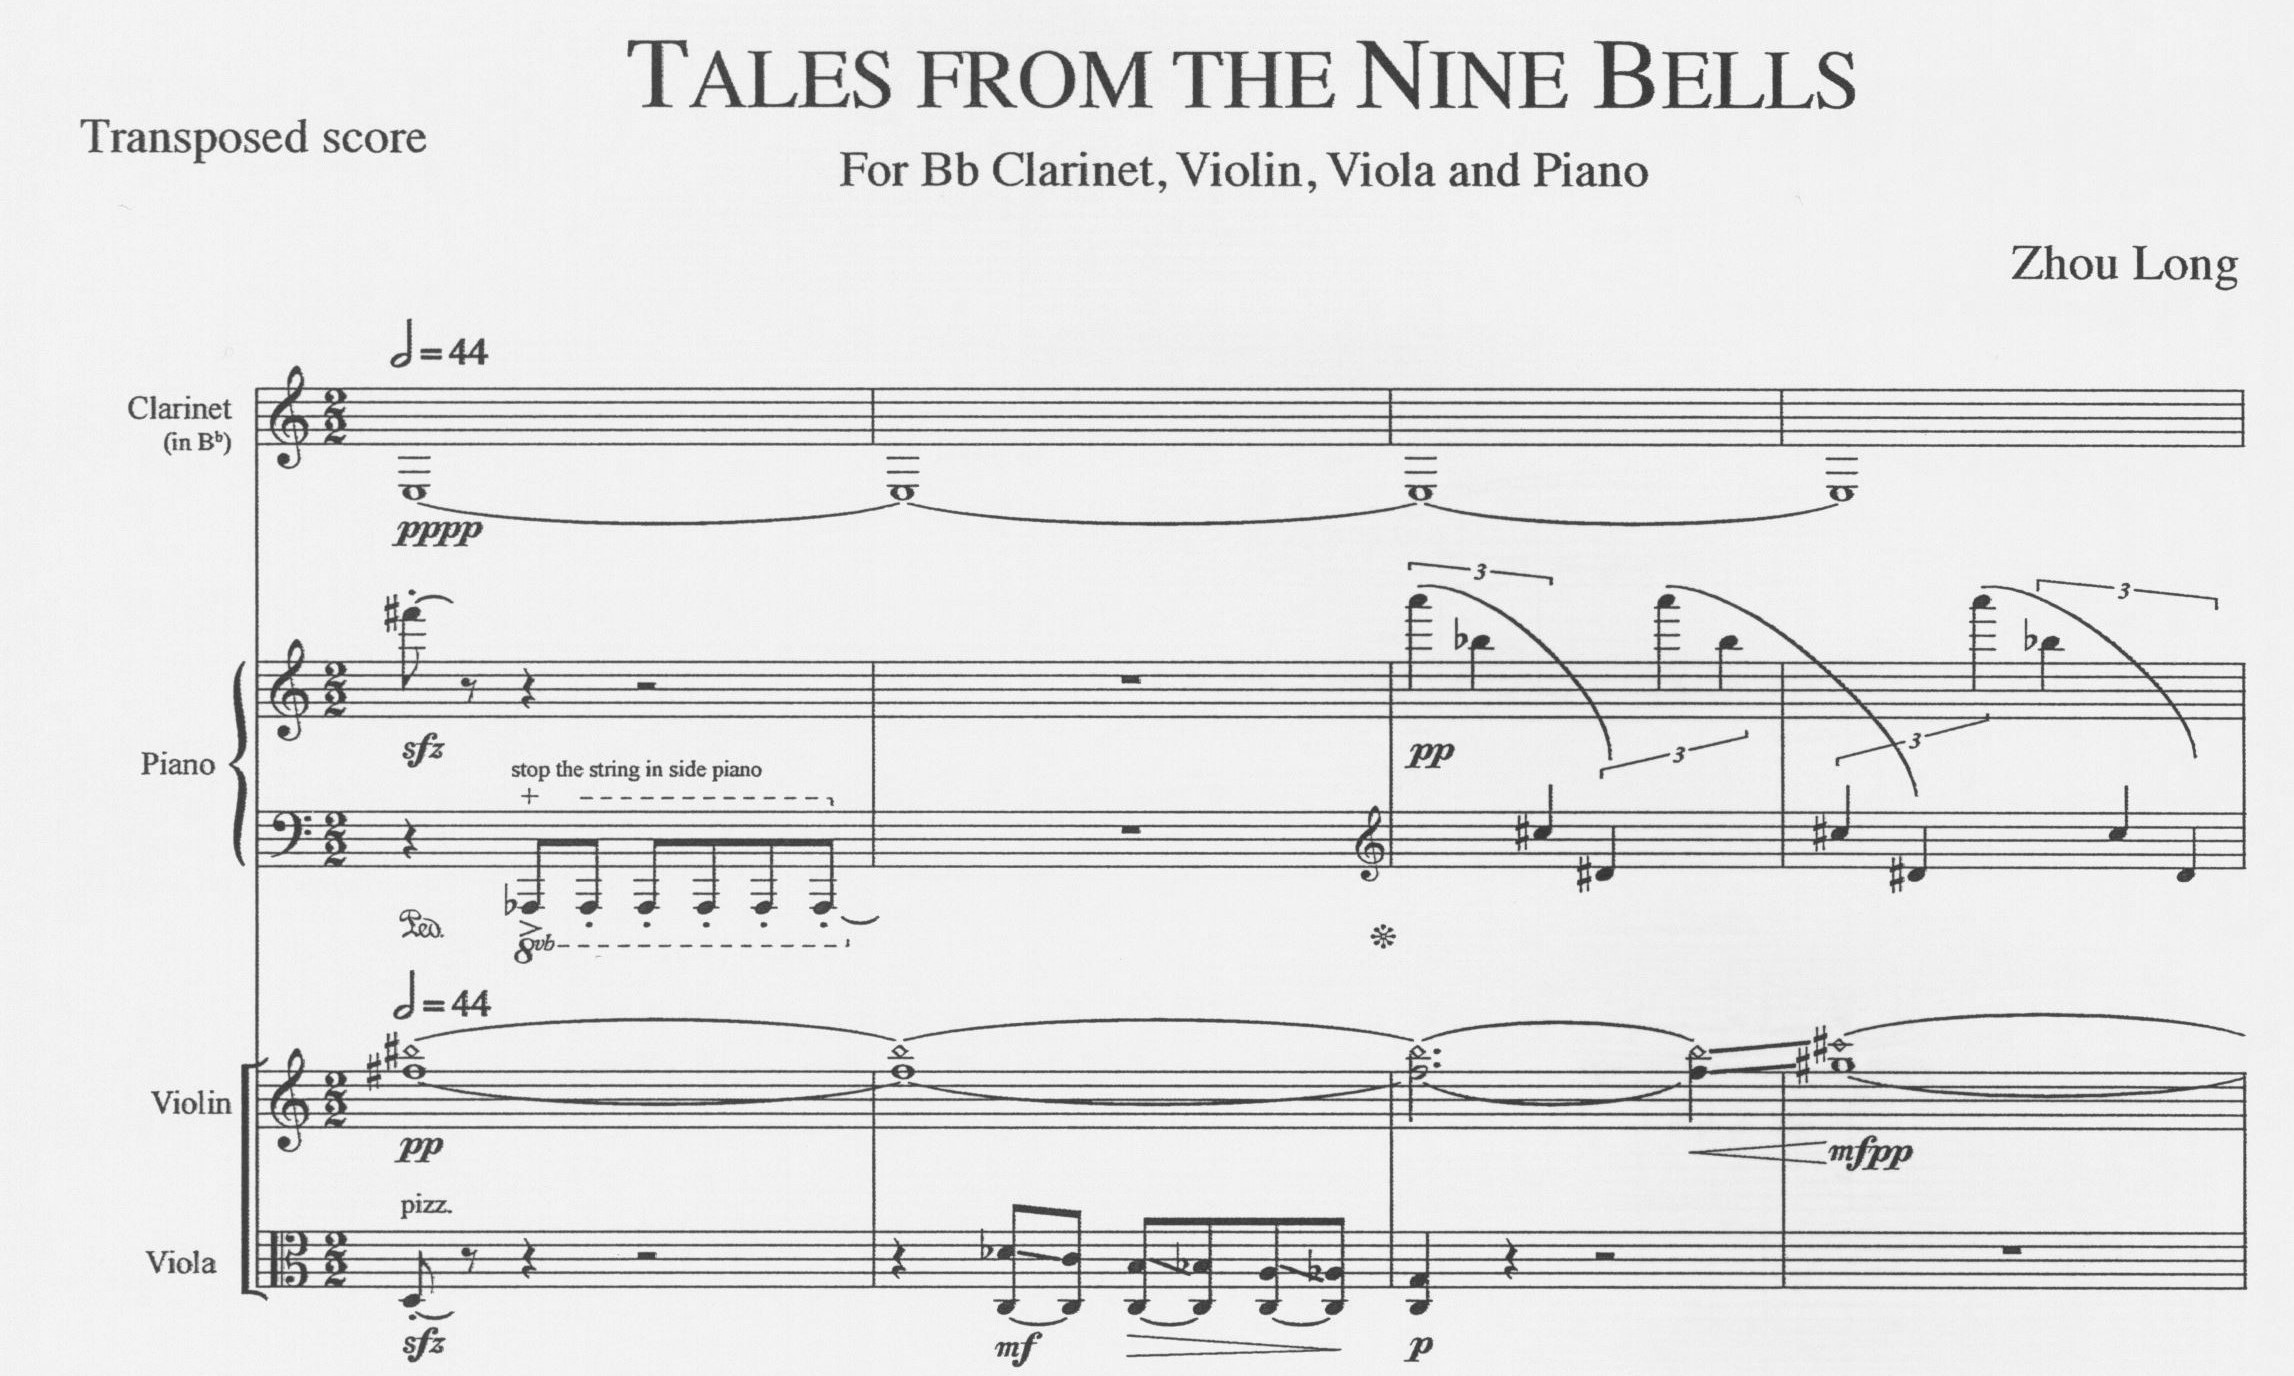 Tales from the Nine Bells - Zhou Long